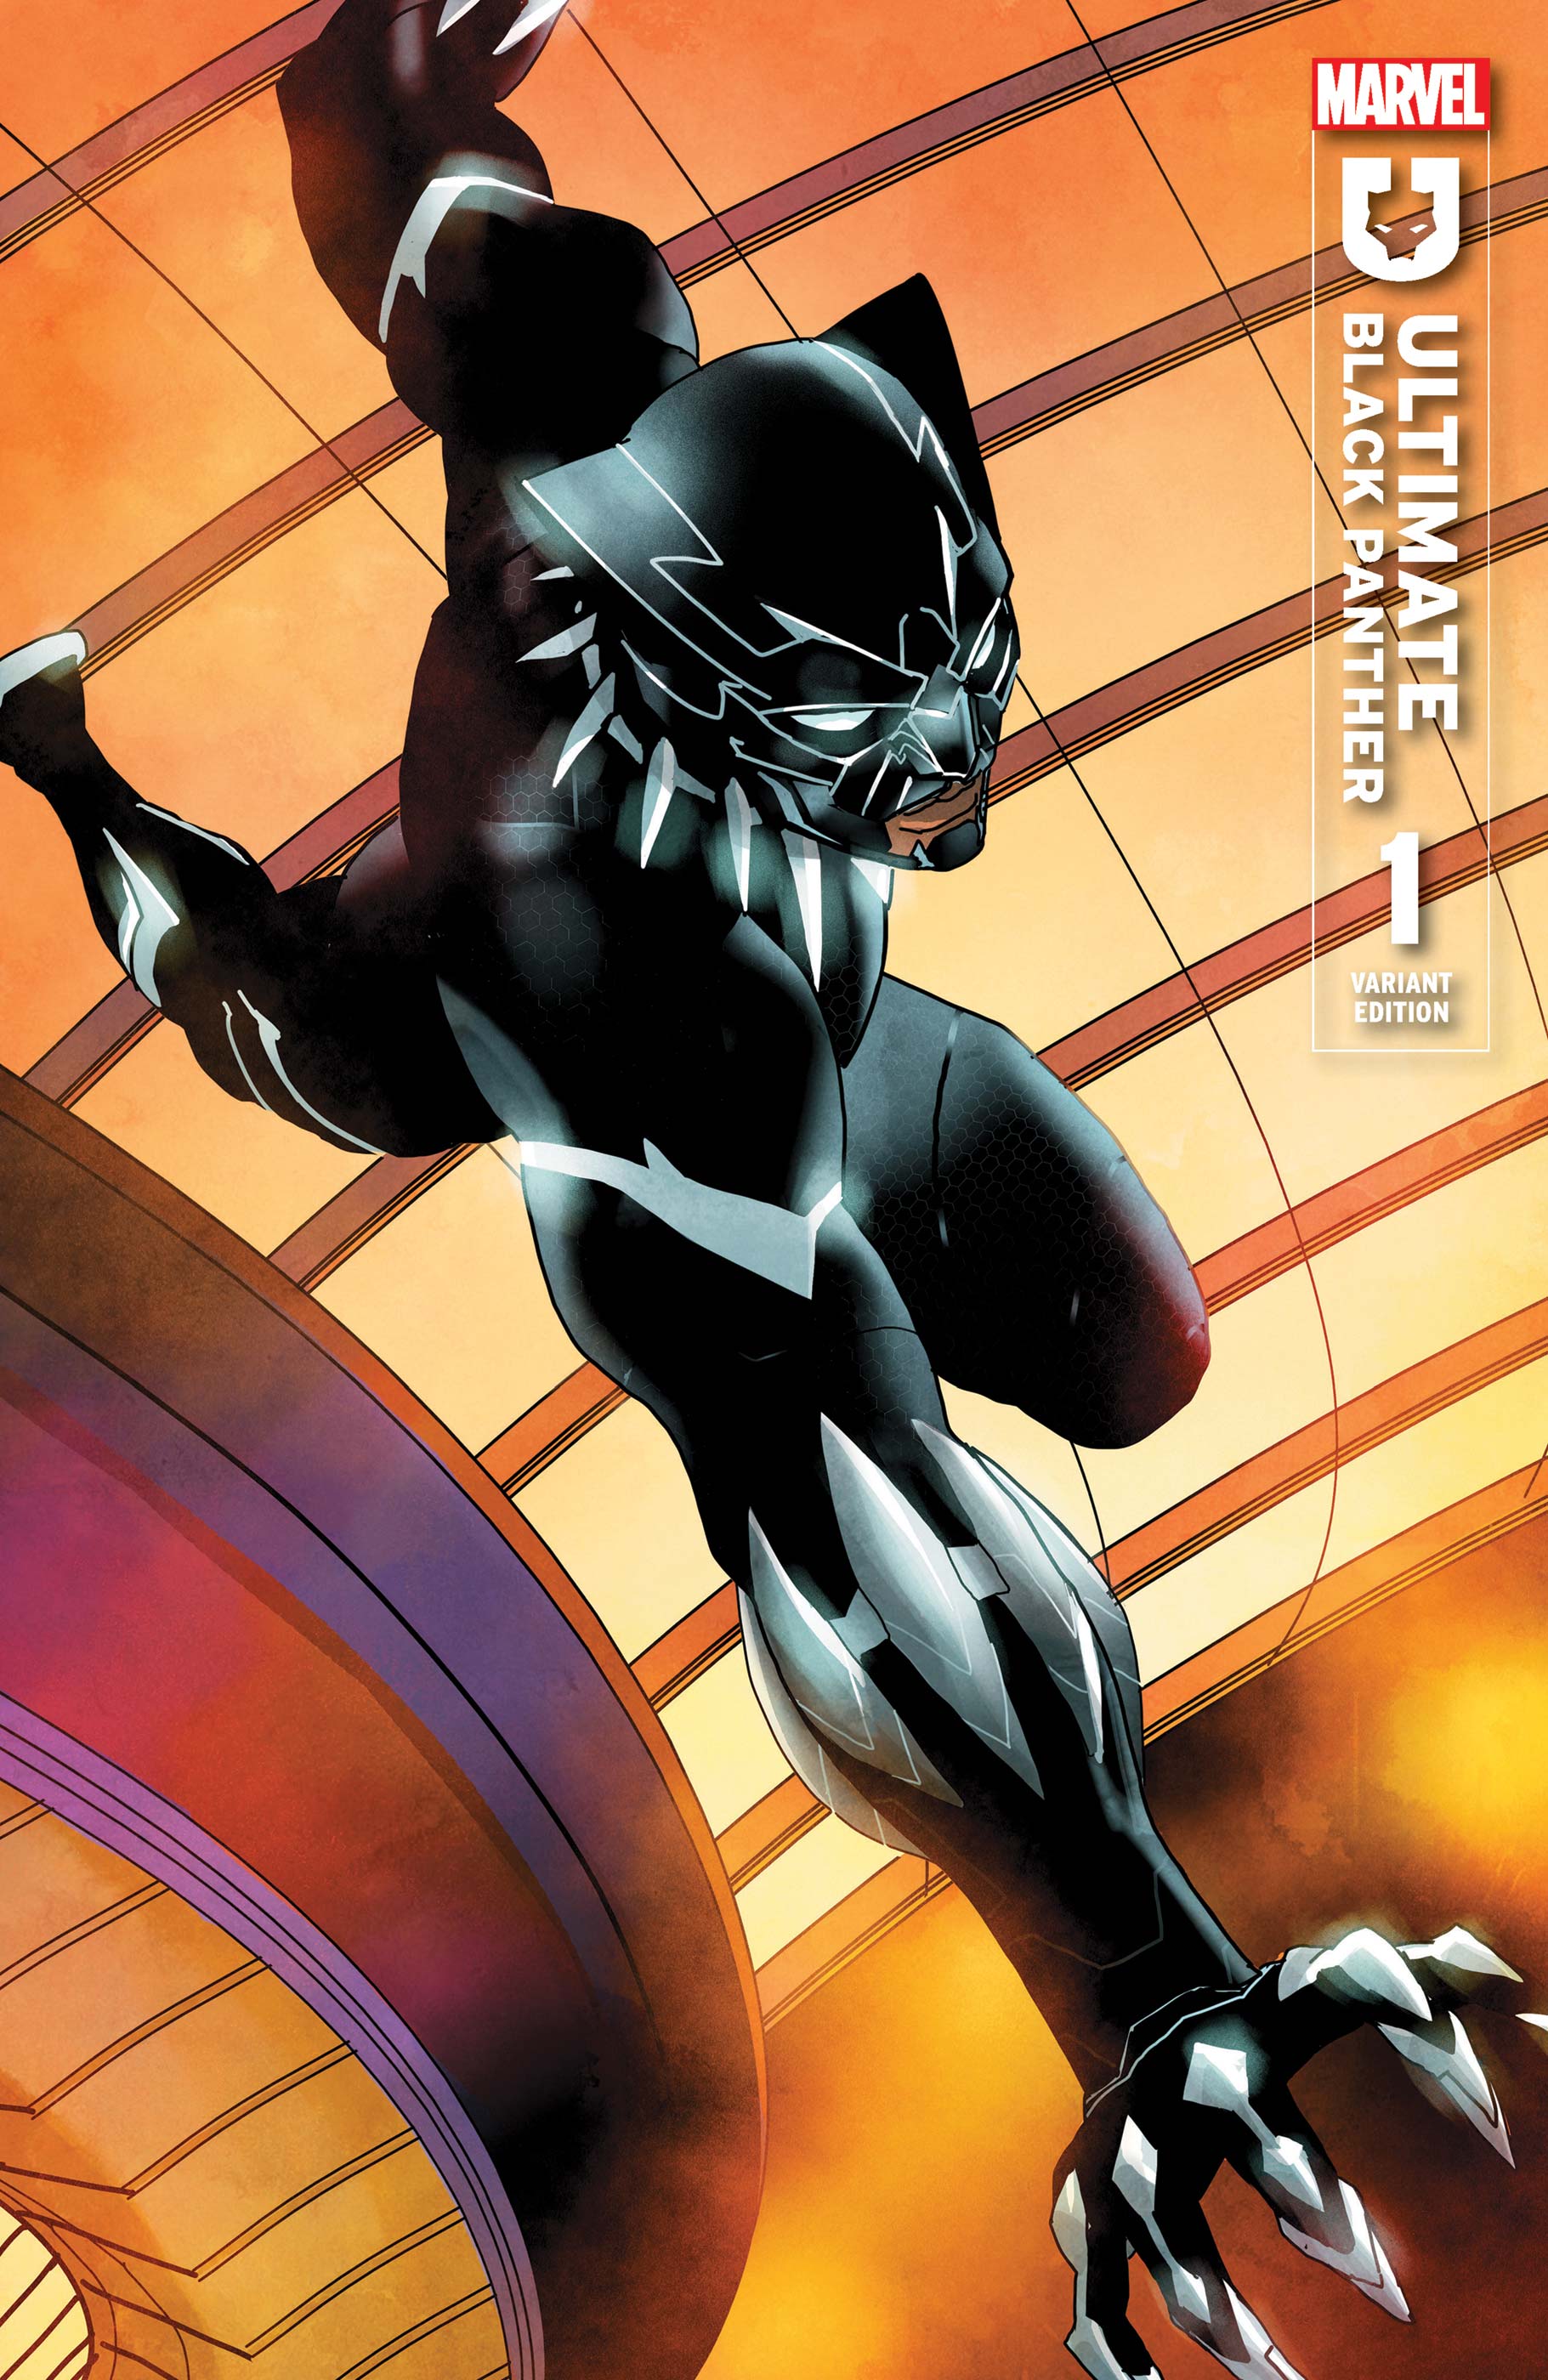 Ultimate Black Panther (2024) #1 (Variant)